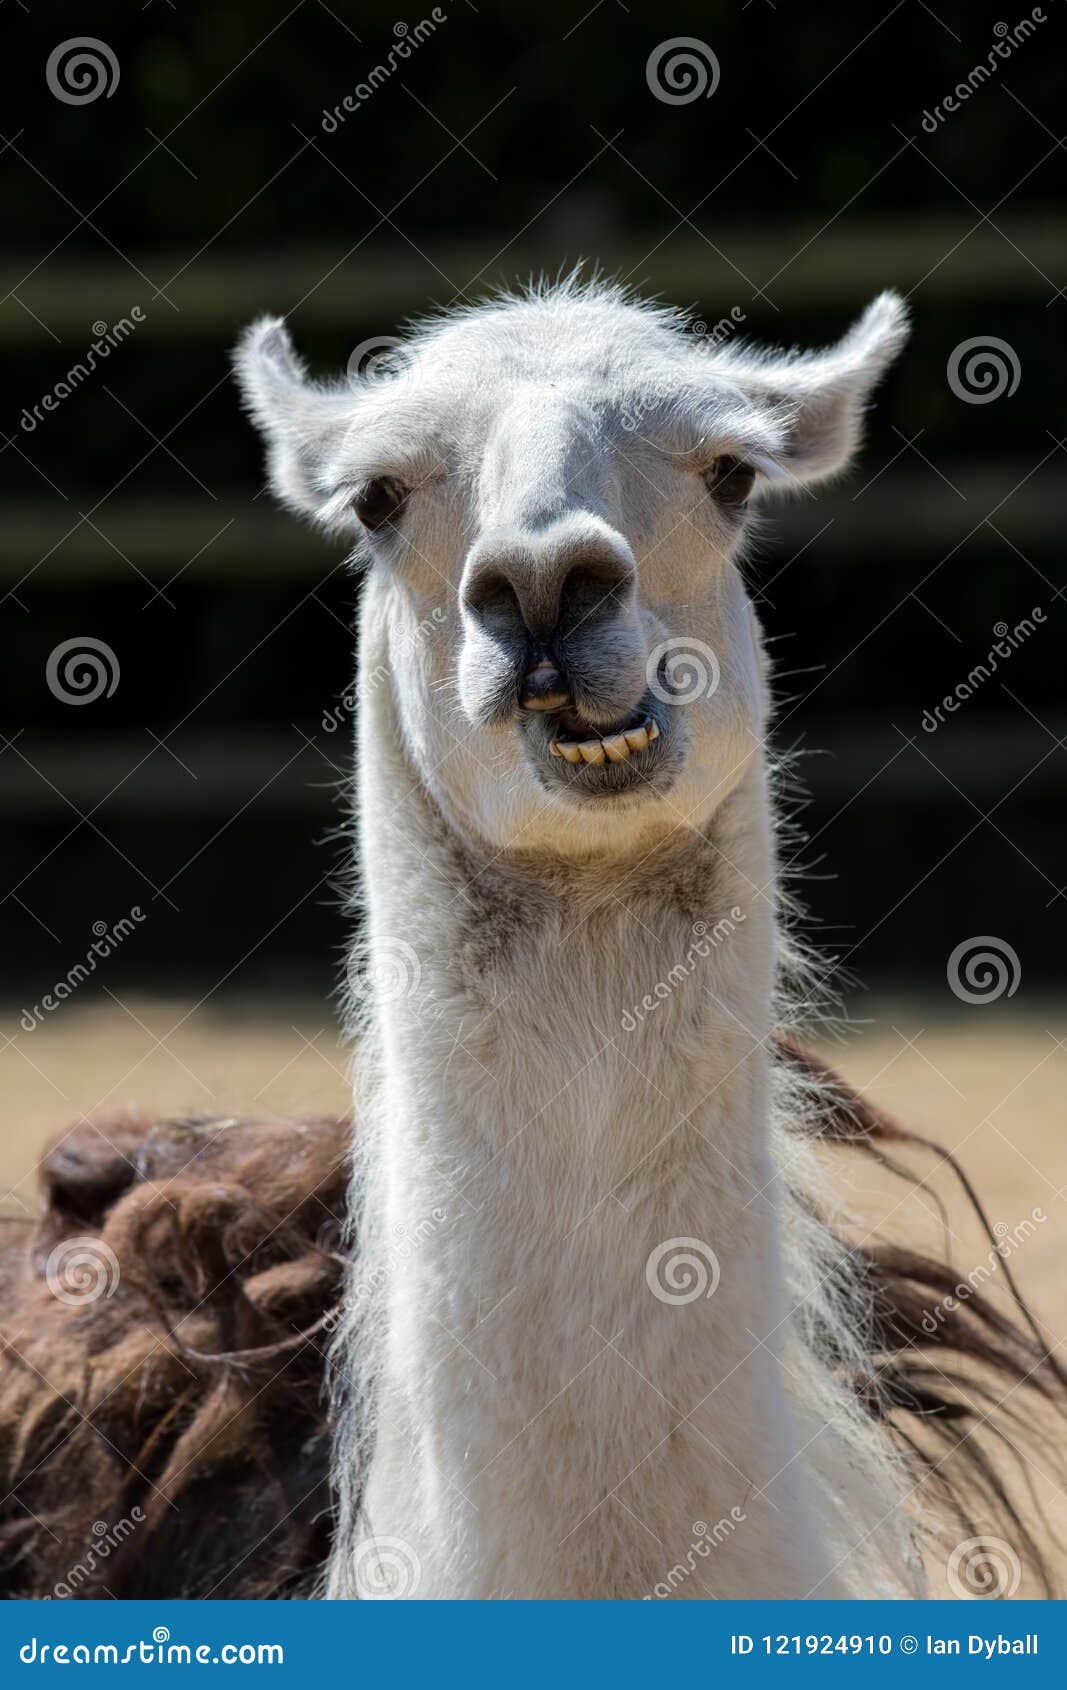 dumb animal. cute crazy llama pulling face. funny meme image.